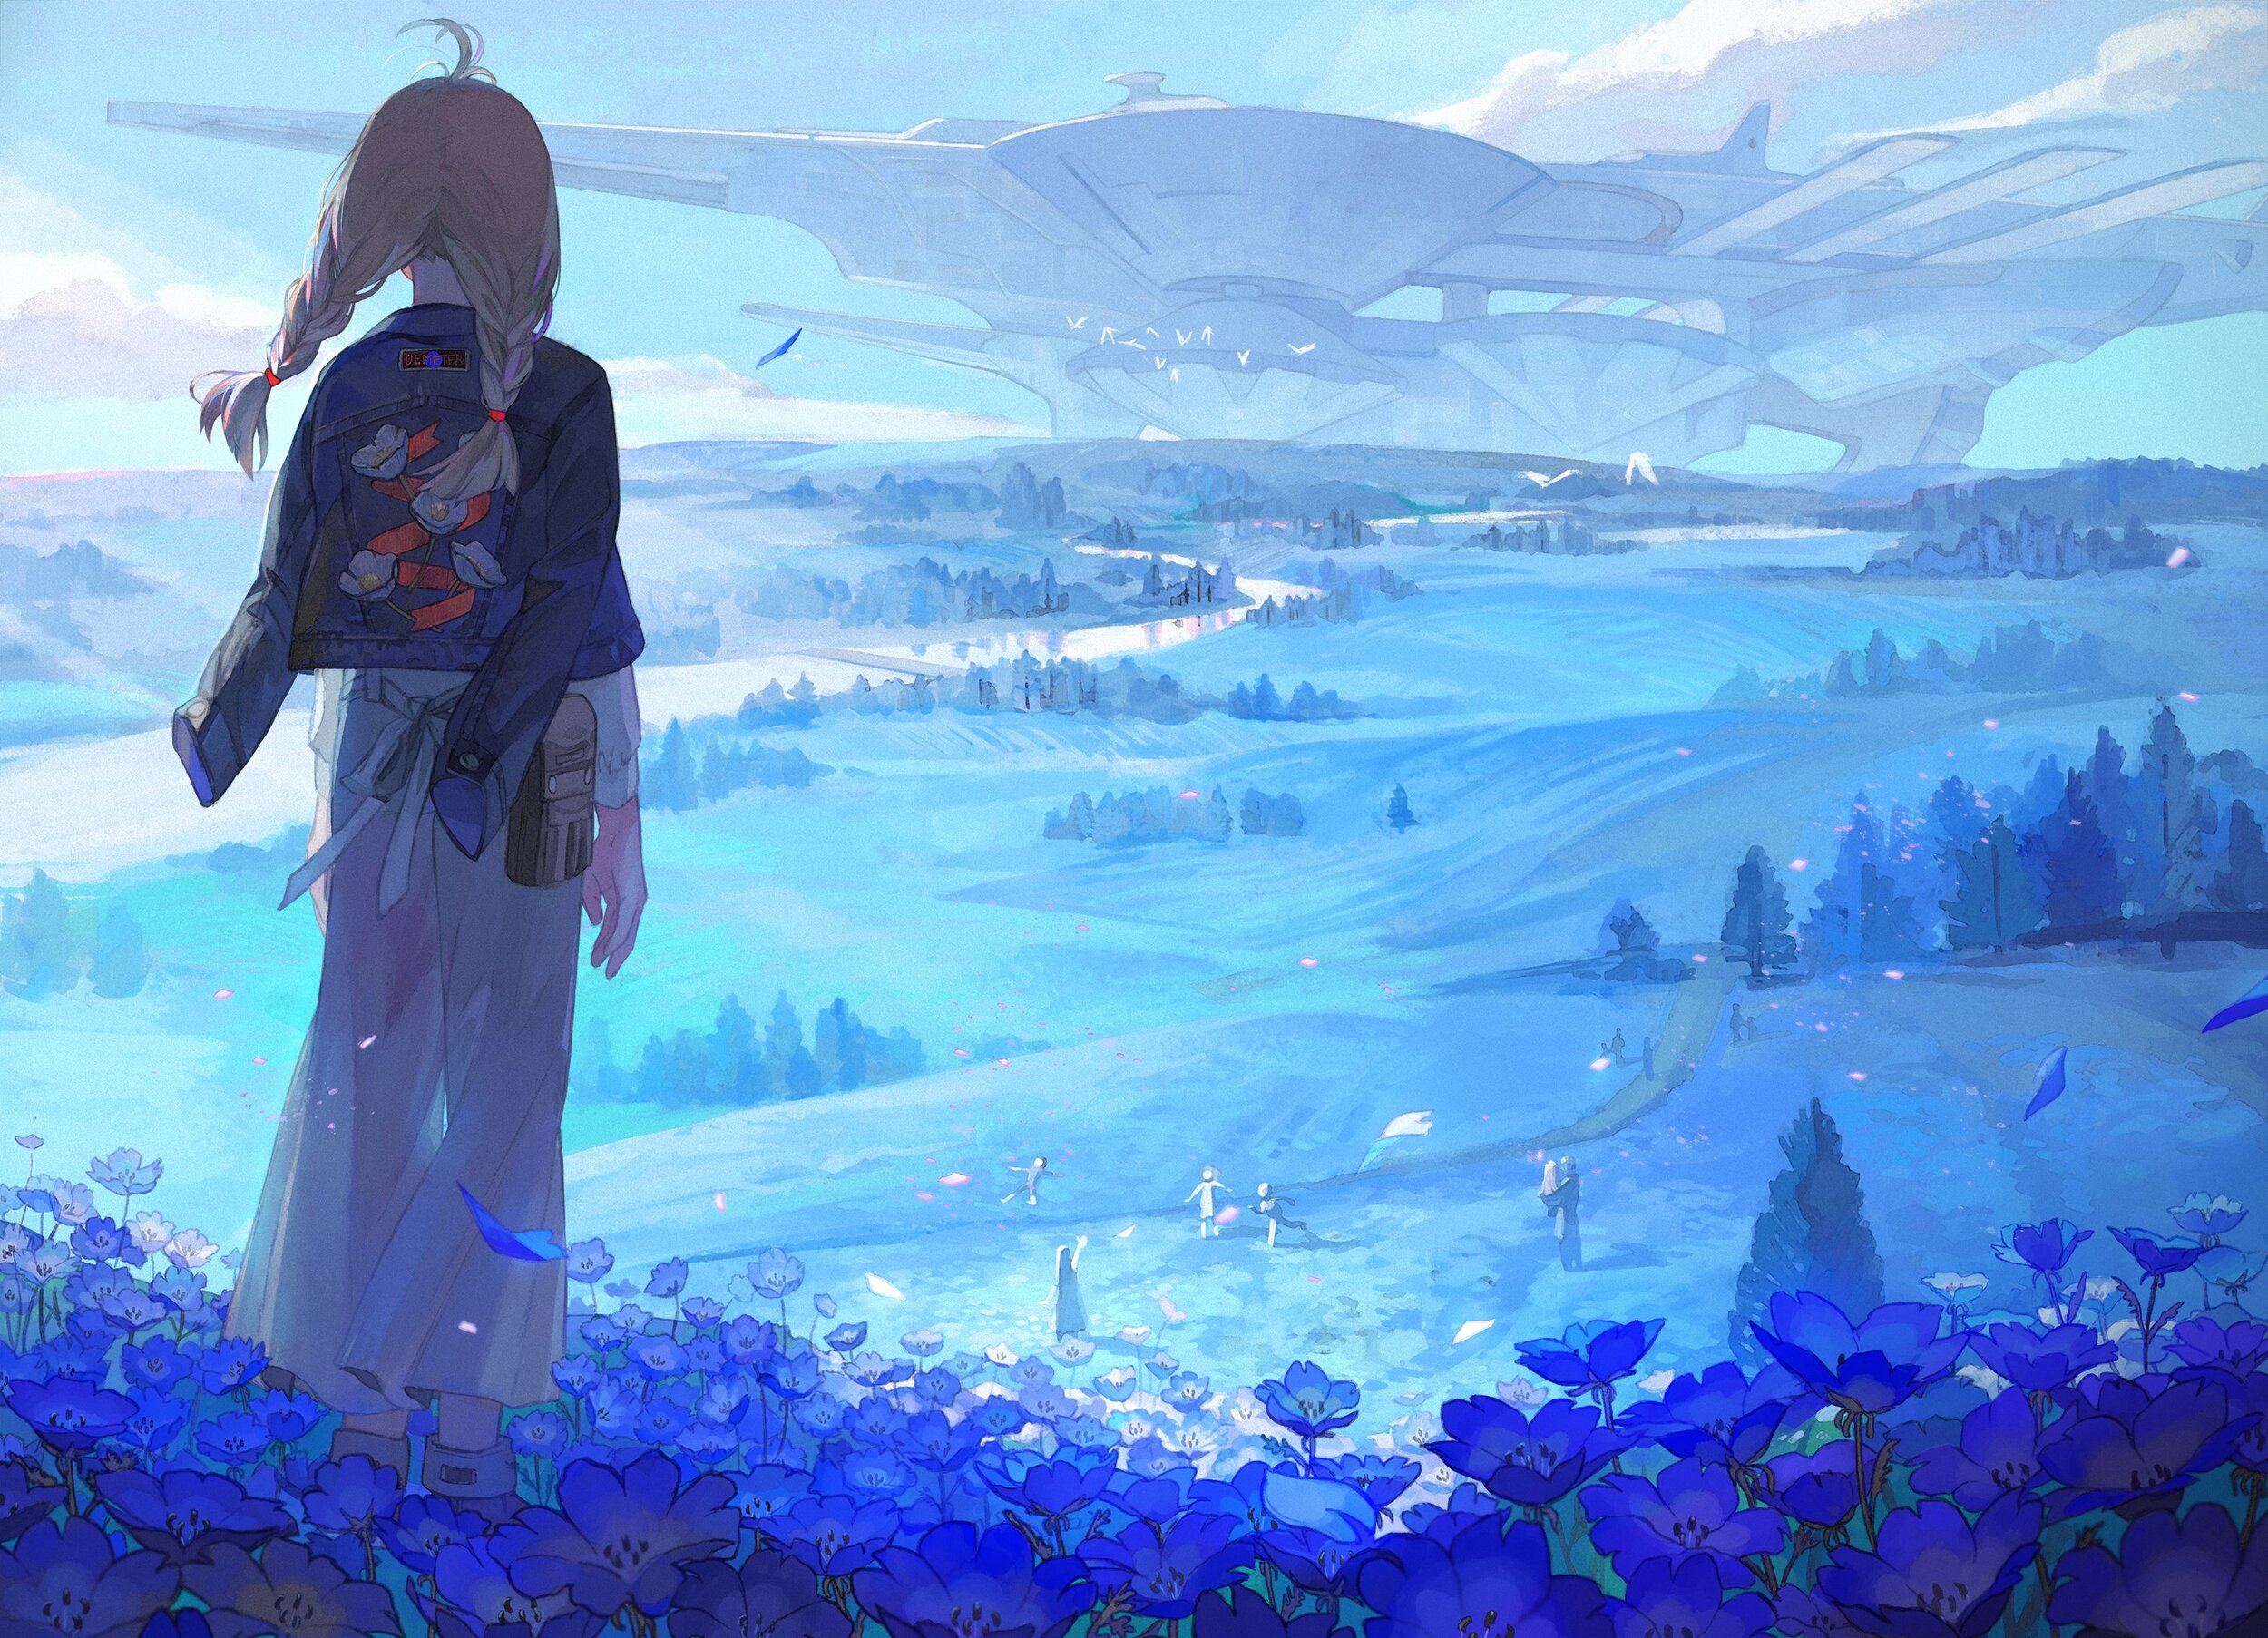 Fuwan Manga Anime Girls Flowers Digital Art Artwork Spaceship Standing Looking Into The Distance Pet 2500x1806